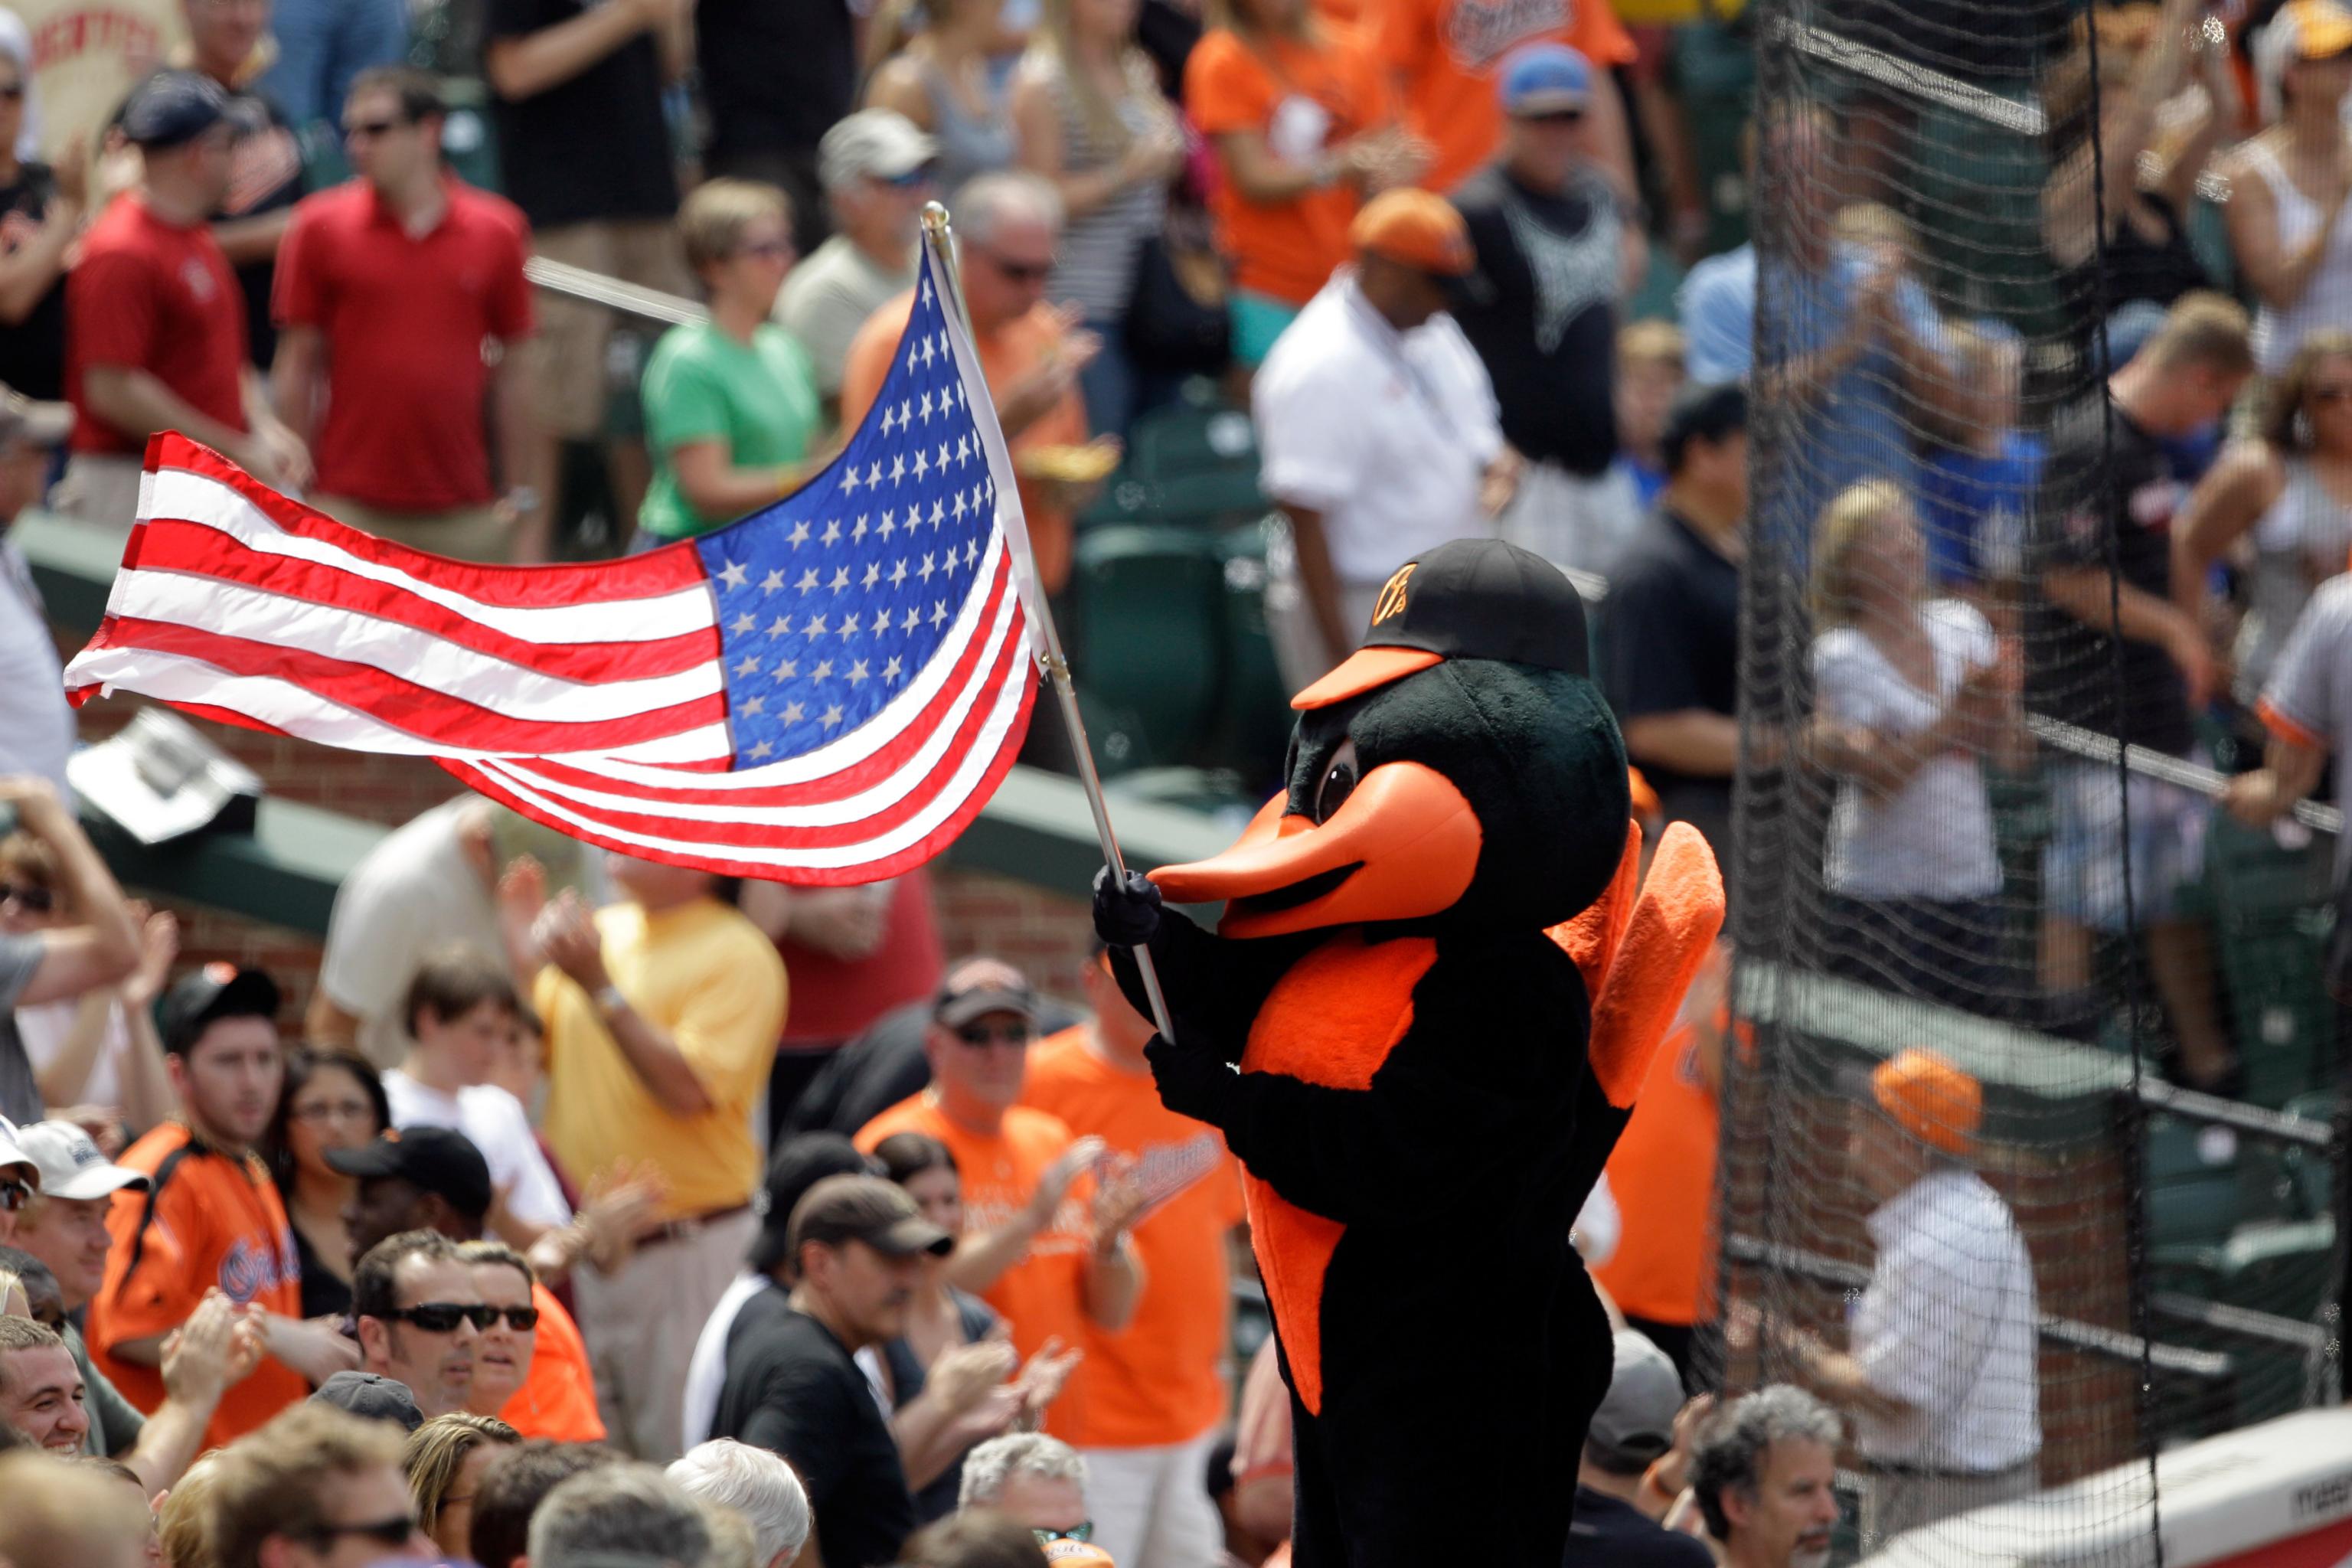 Baltimore Orioles: Lost & Clueless in Birdland